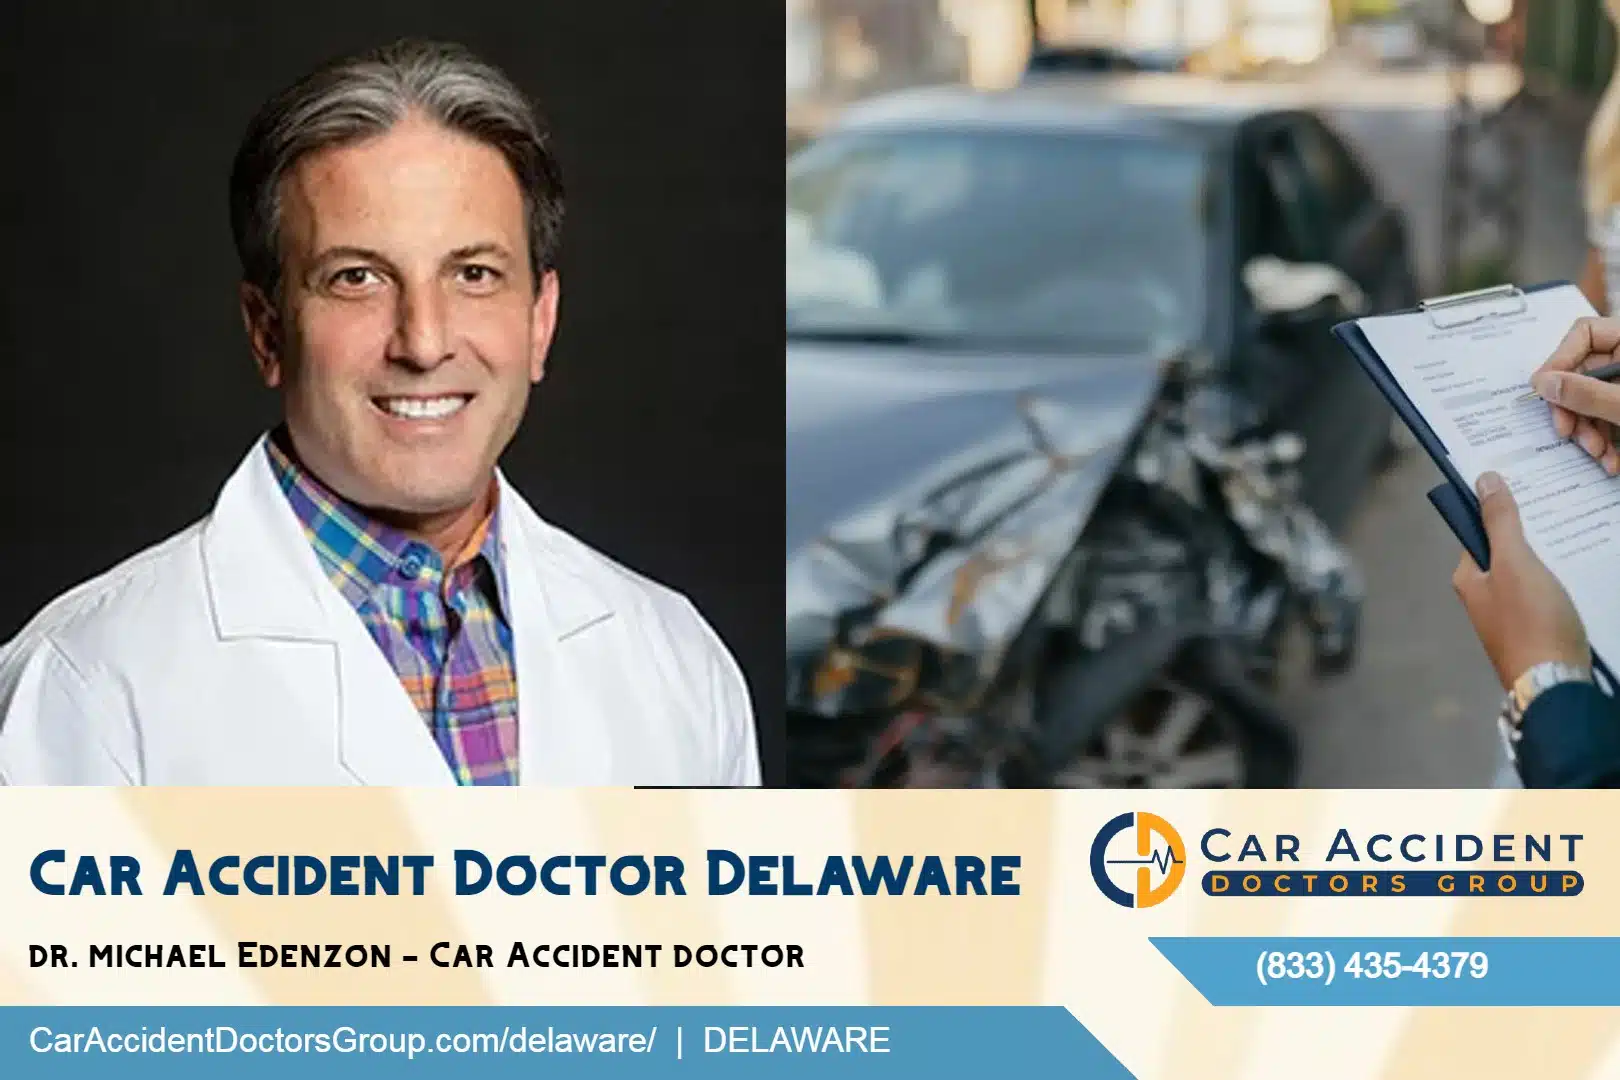 car accident doctor delaware chiropractor michael edenzon